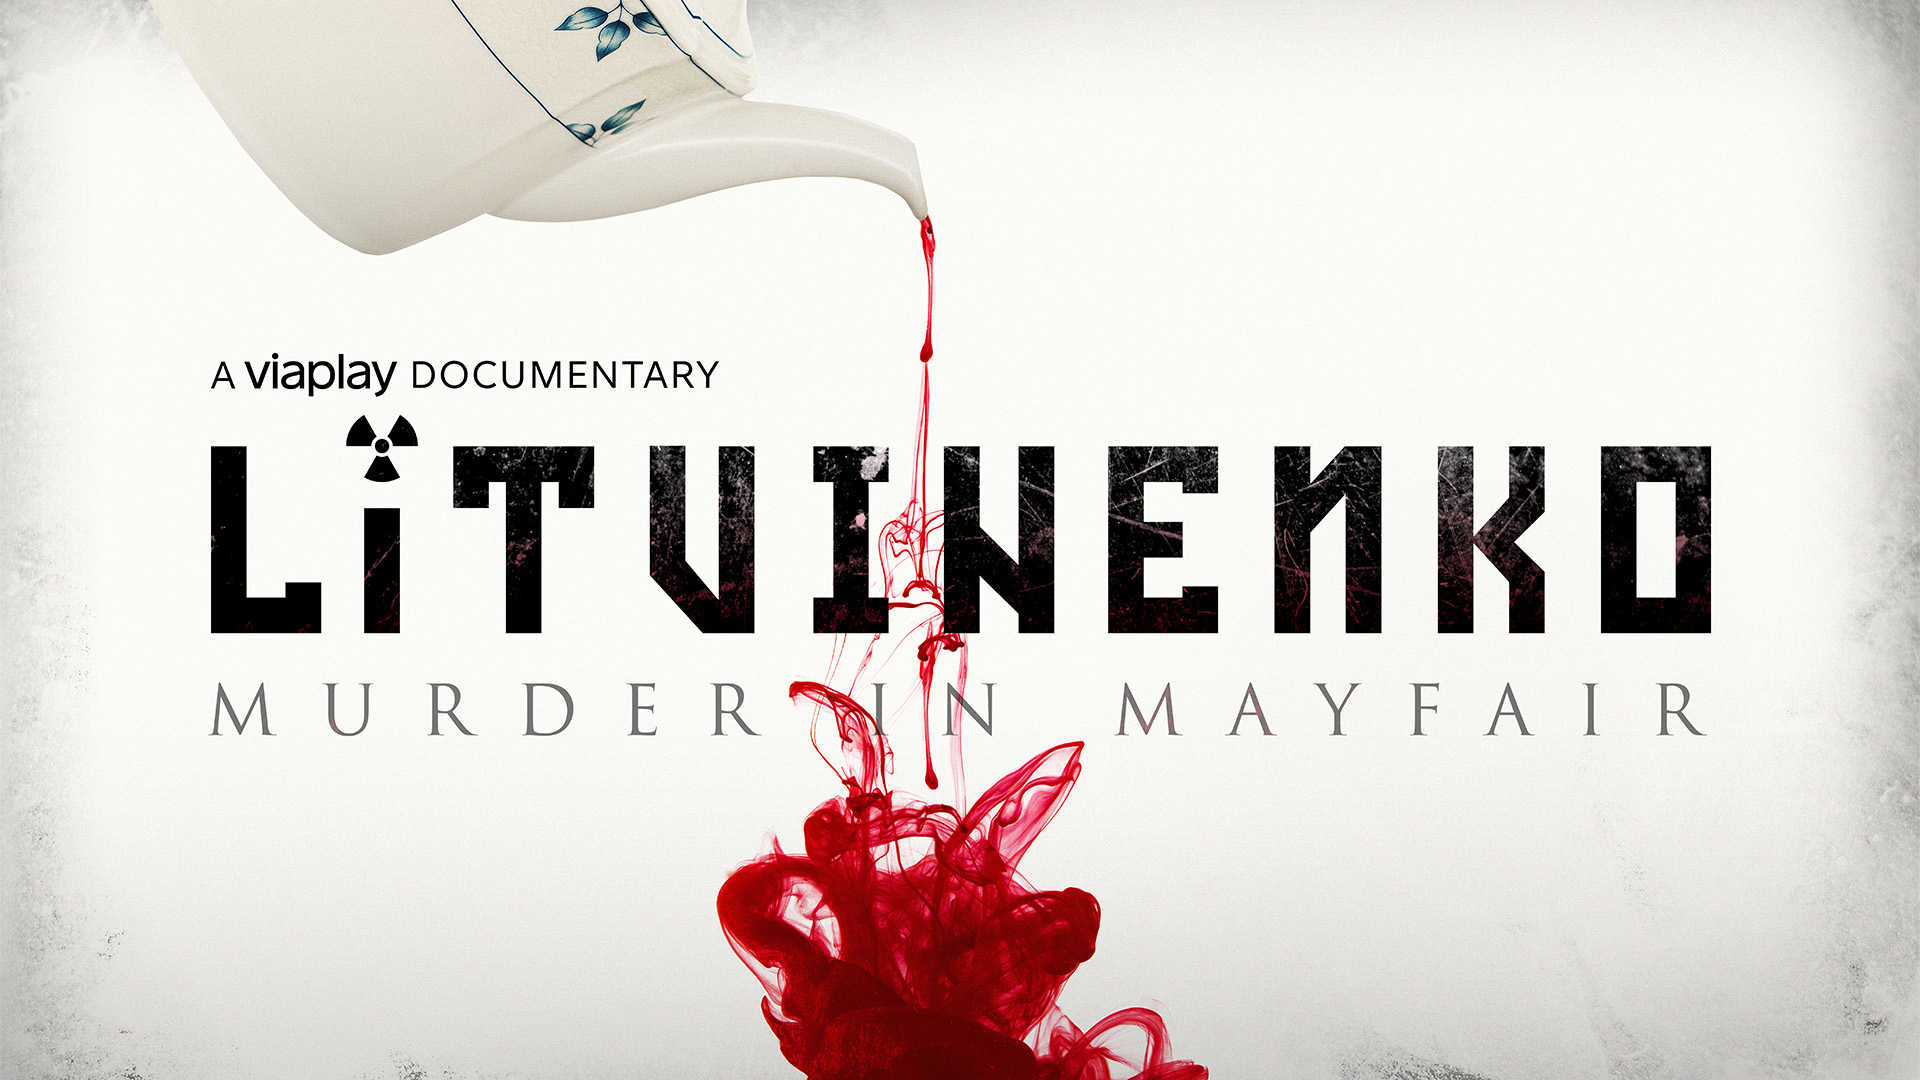 Litvinenko: Murder in Mayfair